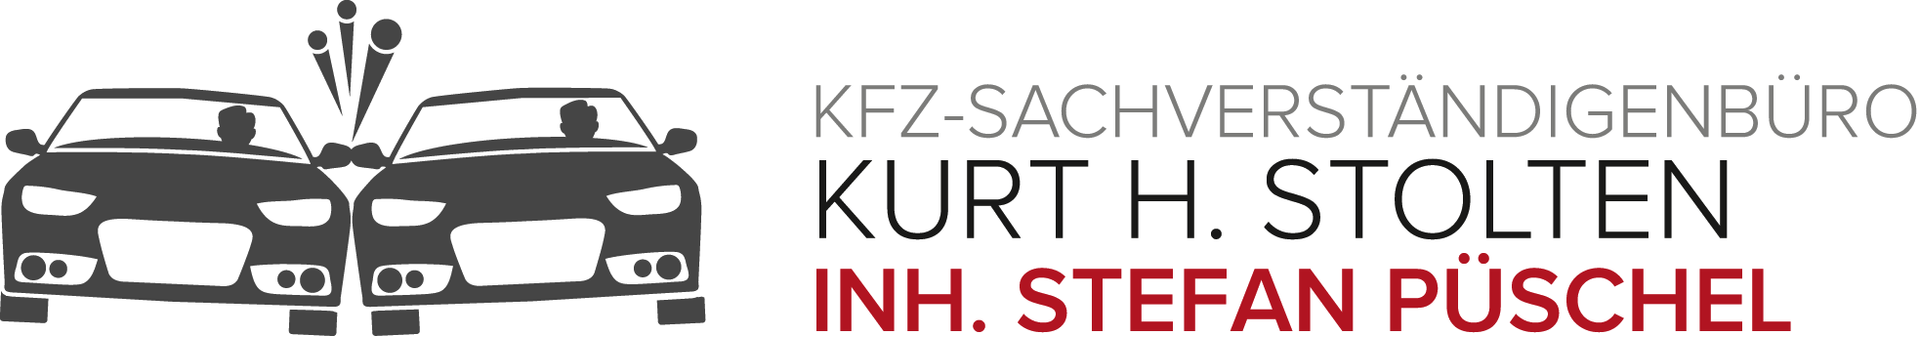 KFZ-Sachverständigenbüro Kurt H. Stolten inh. Stefan Püschel